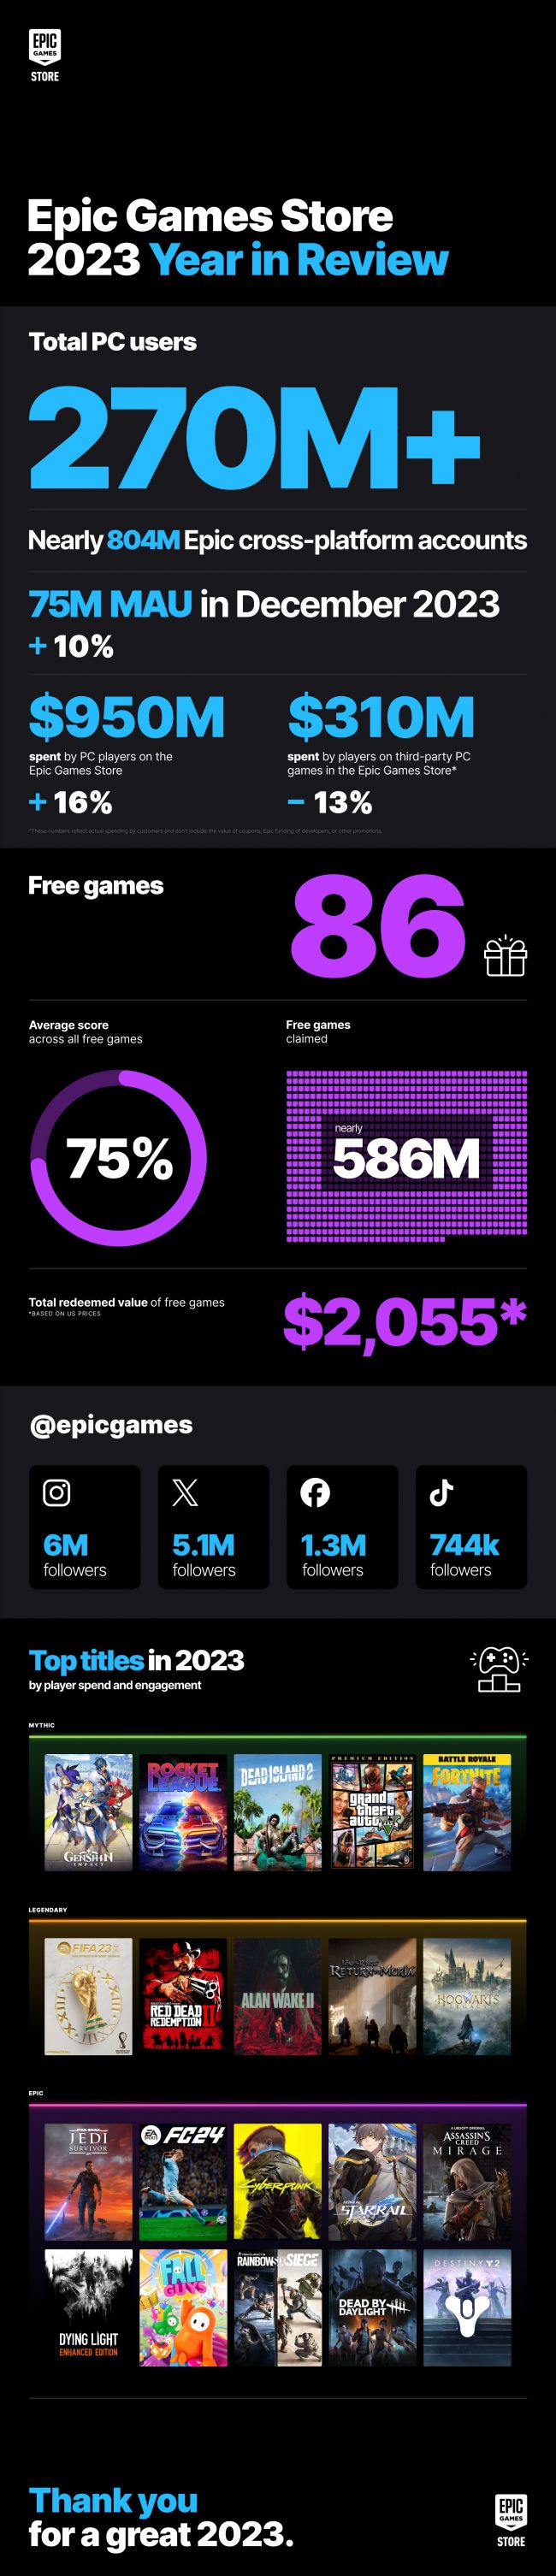 pc-spelare spenderade tio miljarder kronor på epic games store